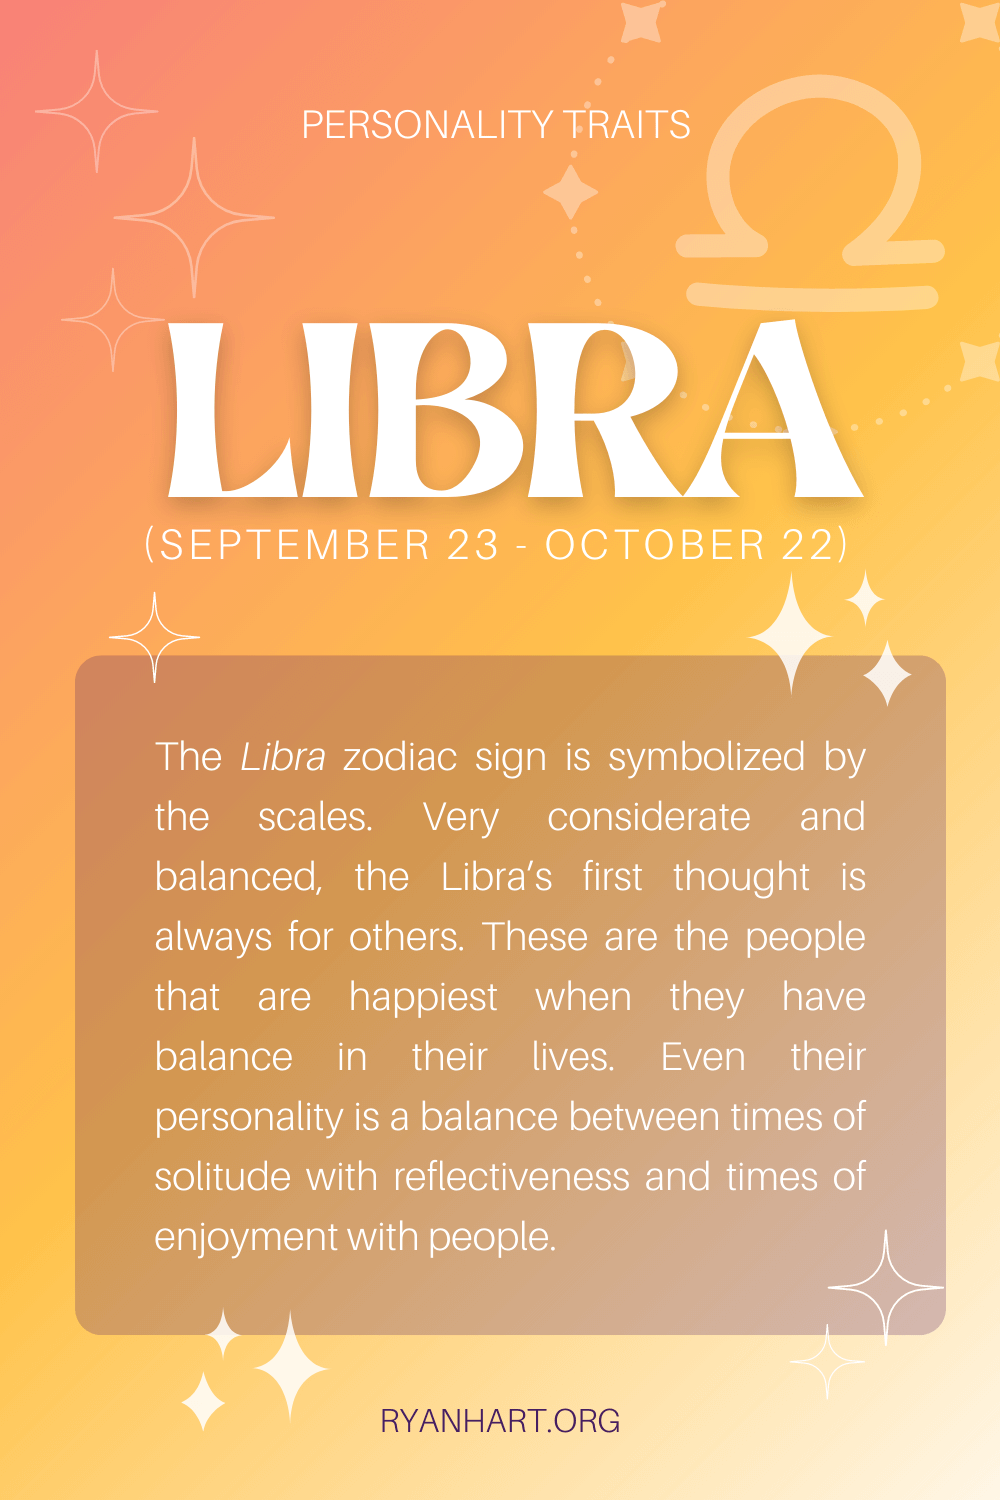 Libra Personality